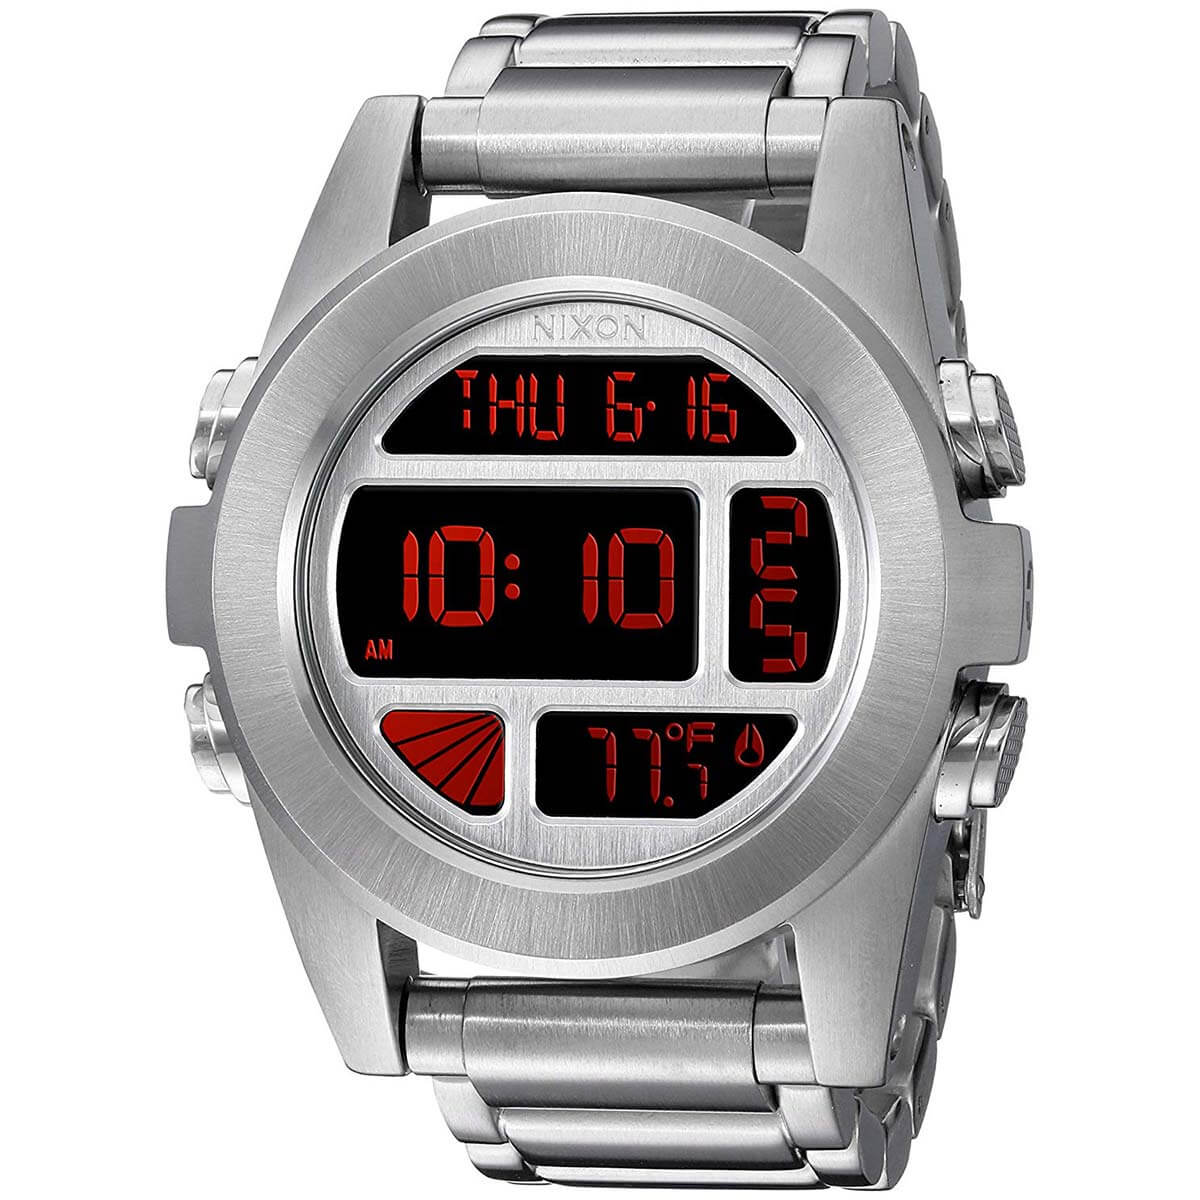 Llanura moderadamente comestible Nixon Men's Digital Watch - Unit SS Stainless Steel Bracelet | A360126